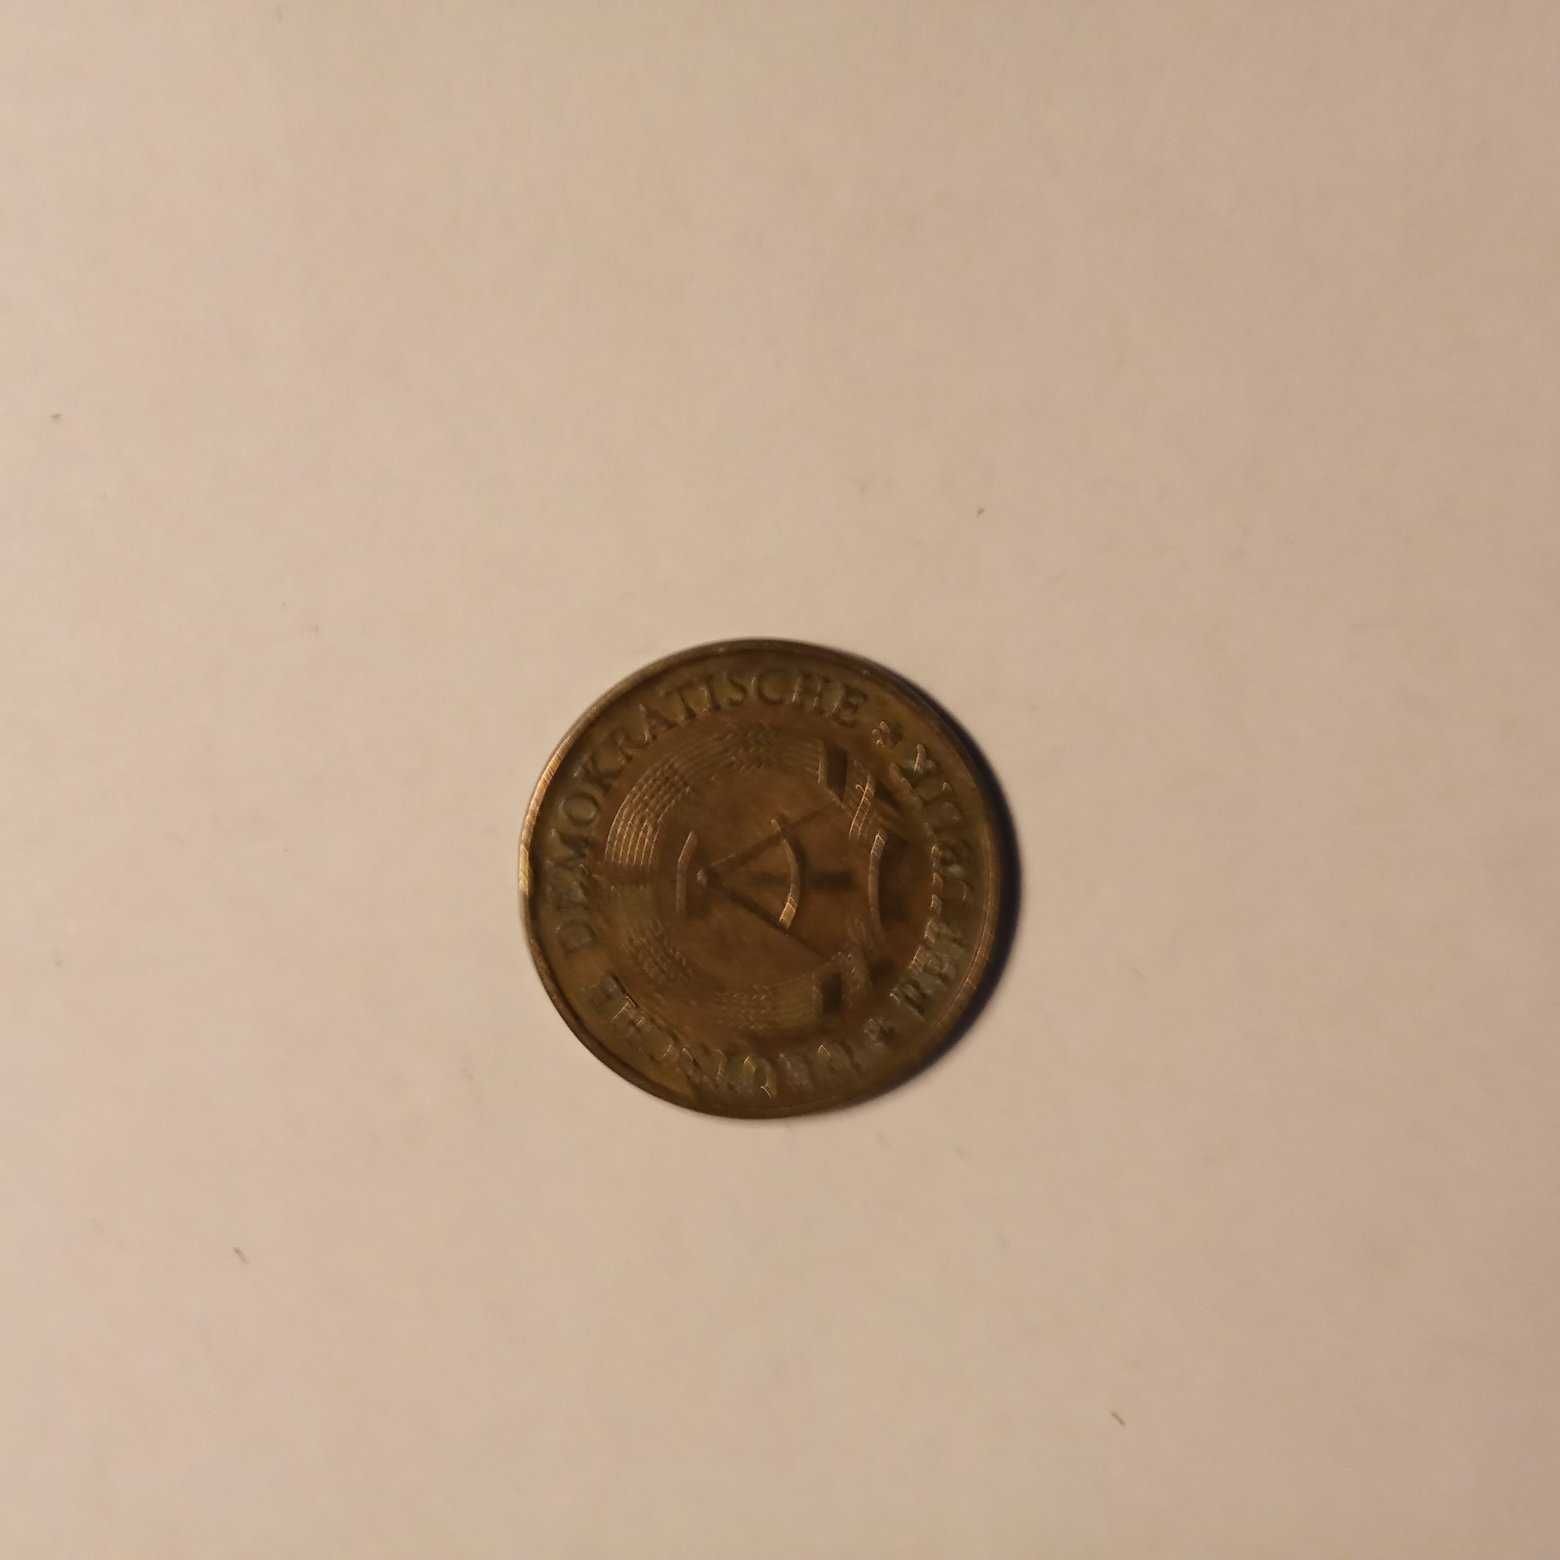 20 PFENNING 1984 года монета